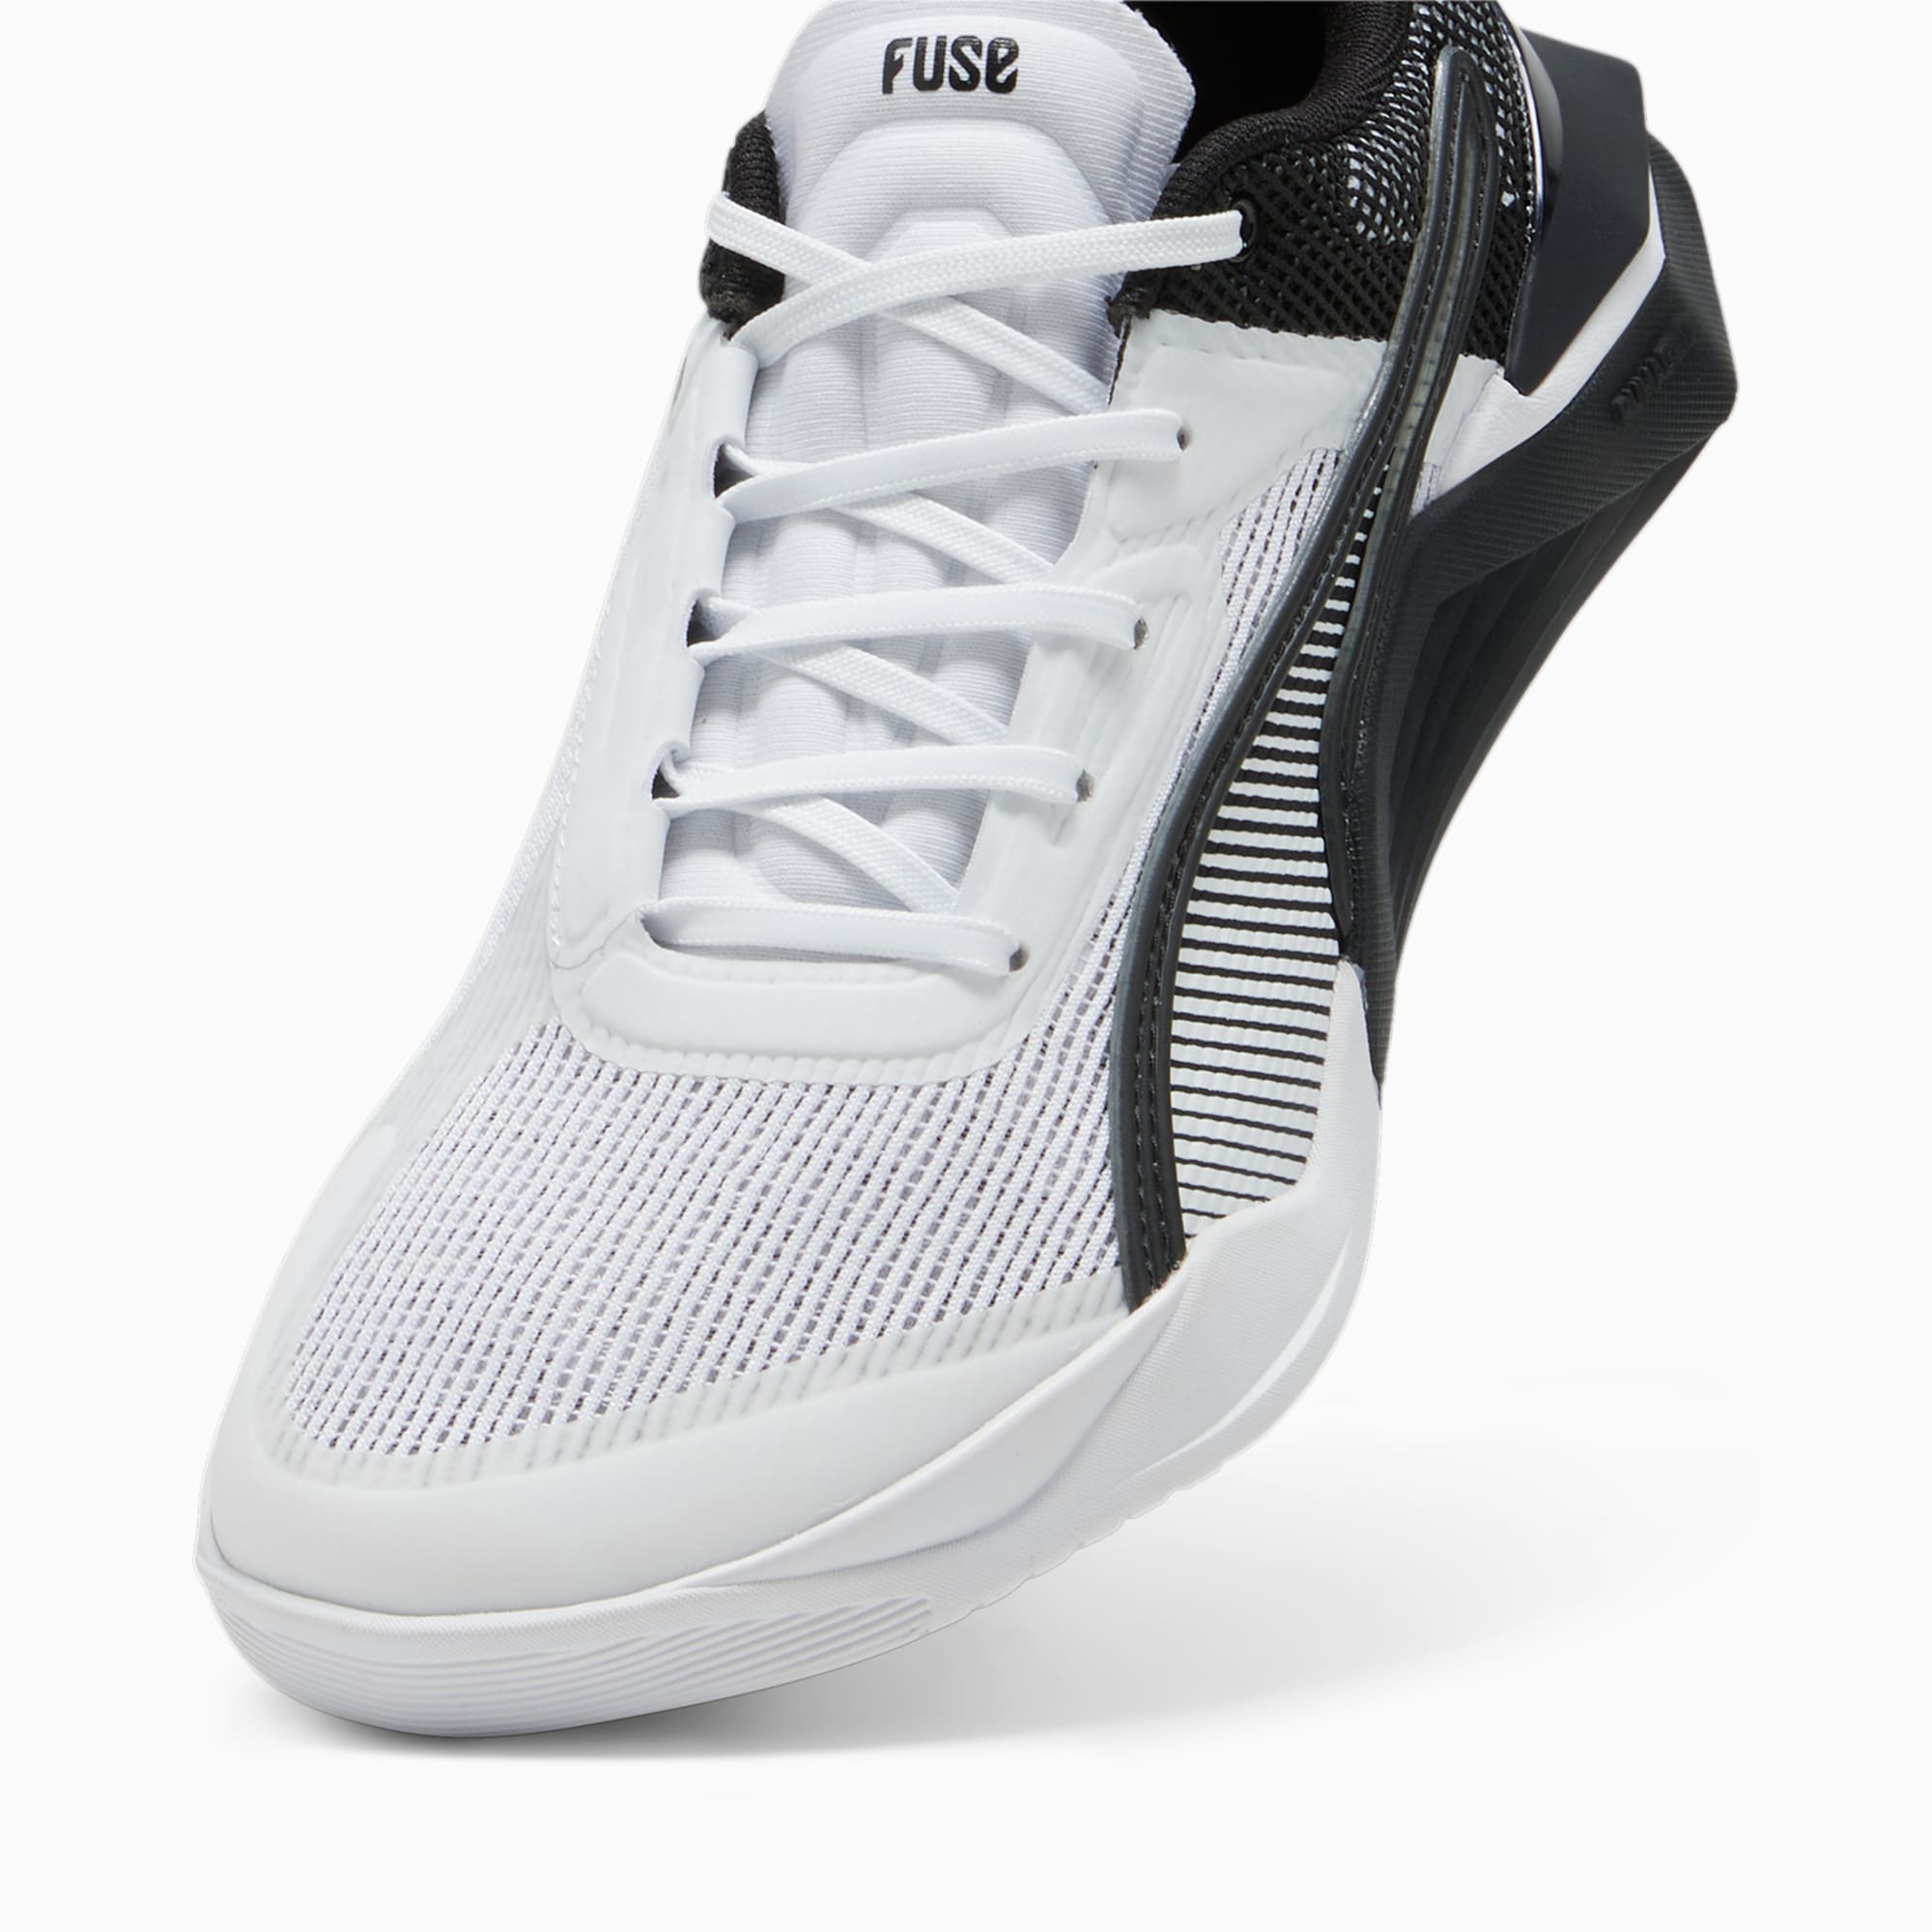 PUMA Fuse 3.0 Women's Training Shoes, White/Black, Size 35,5, Shoes